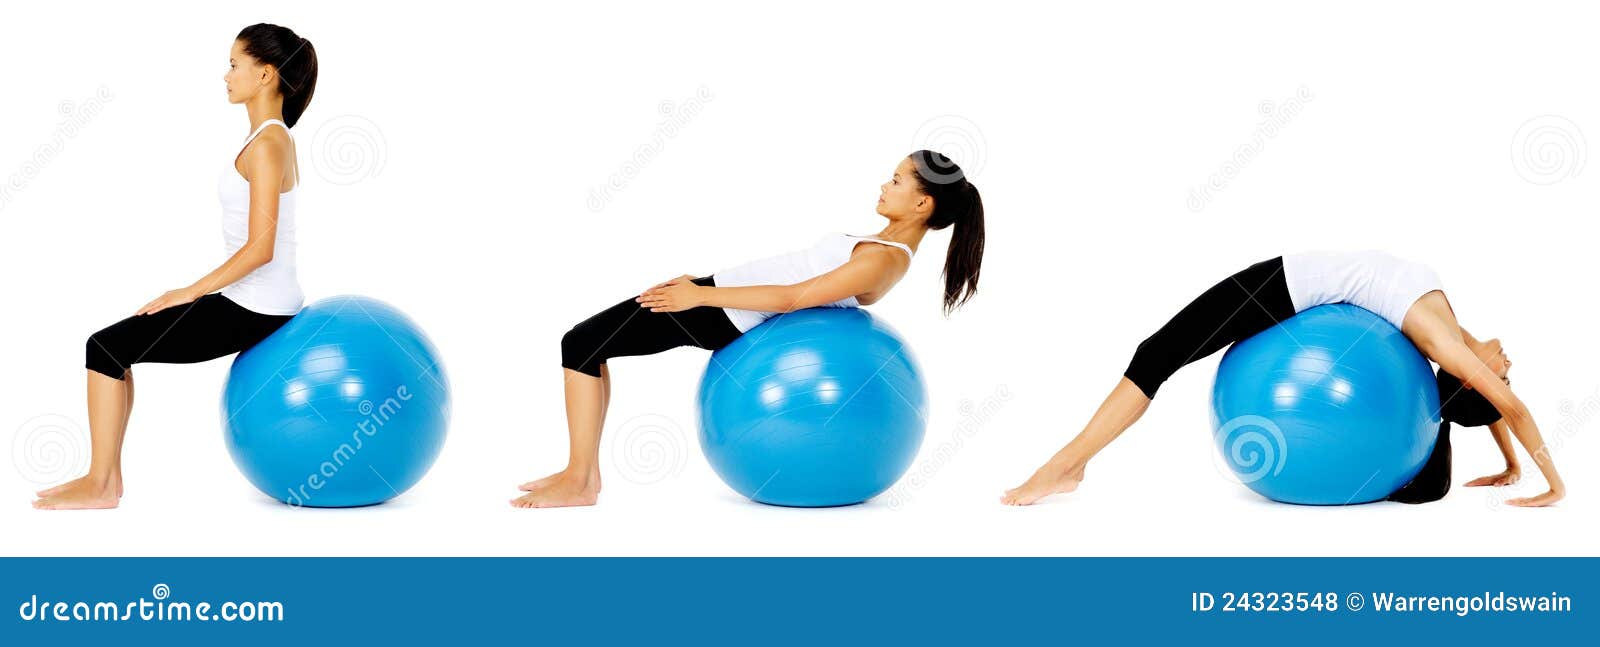 pilates ball exercise